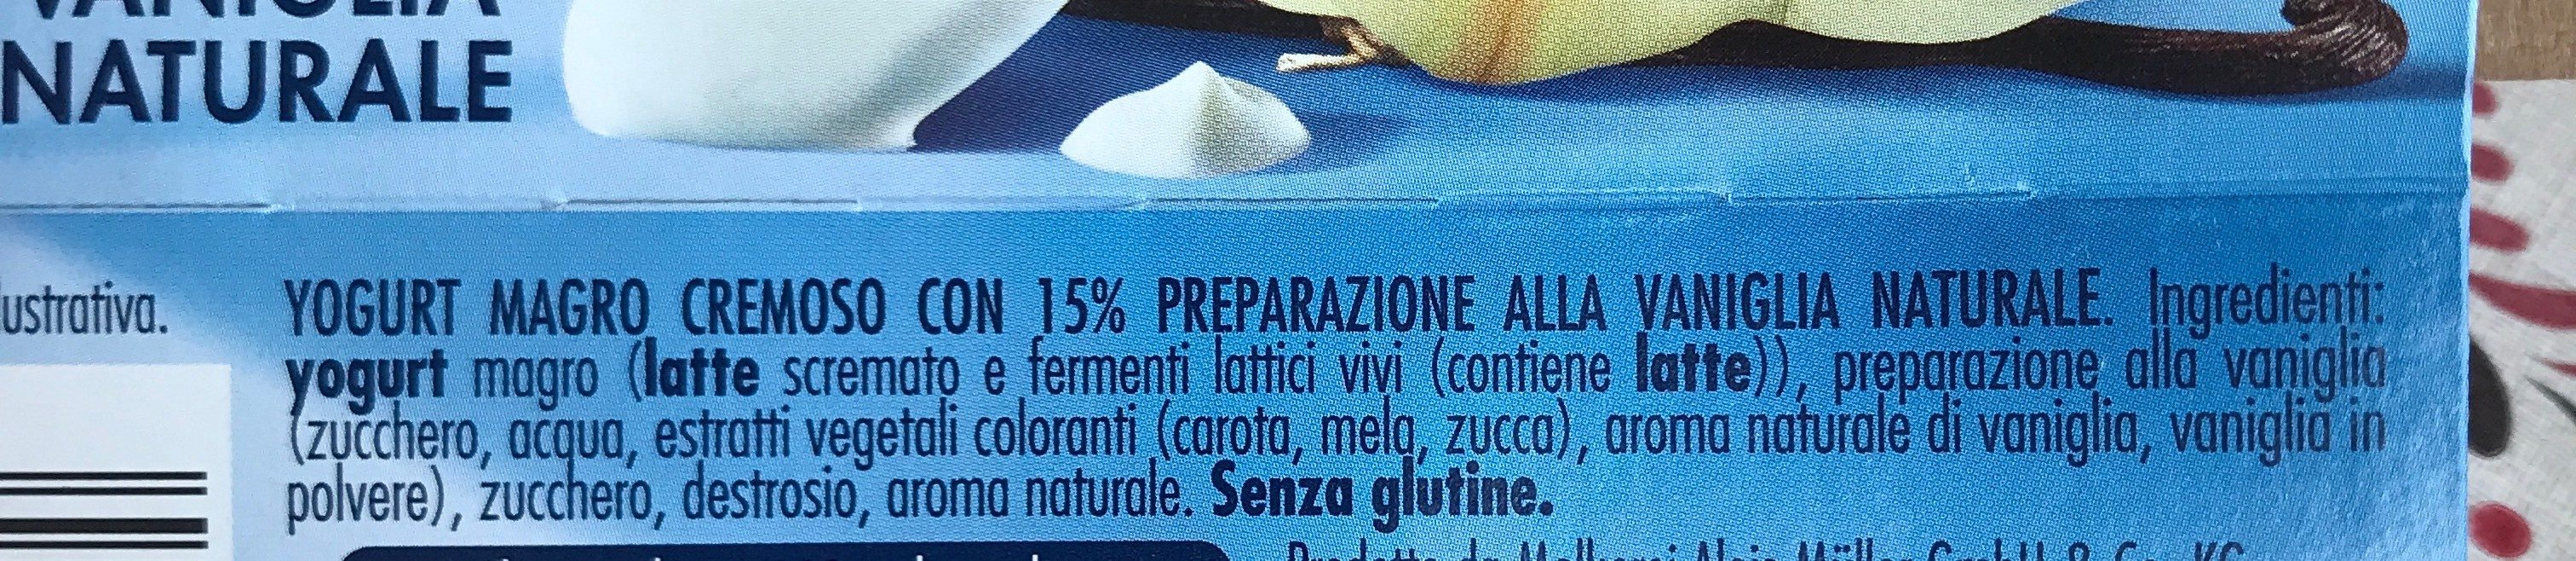 Yogurt zero grassi vaniglia naturale - Ingrédients